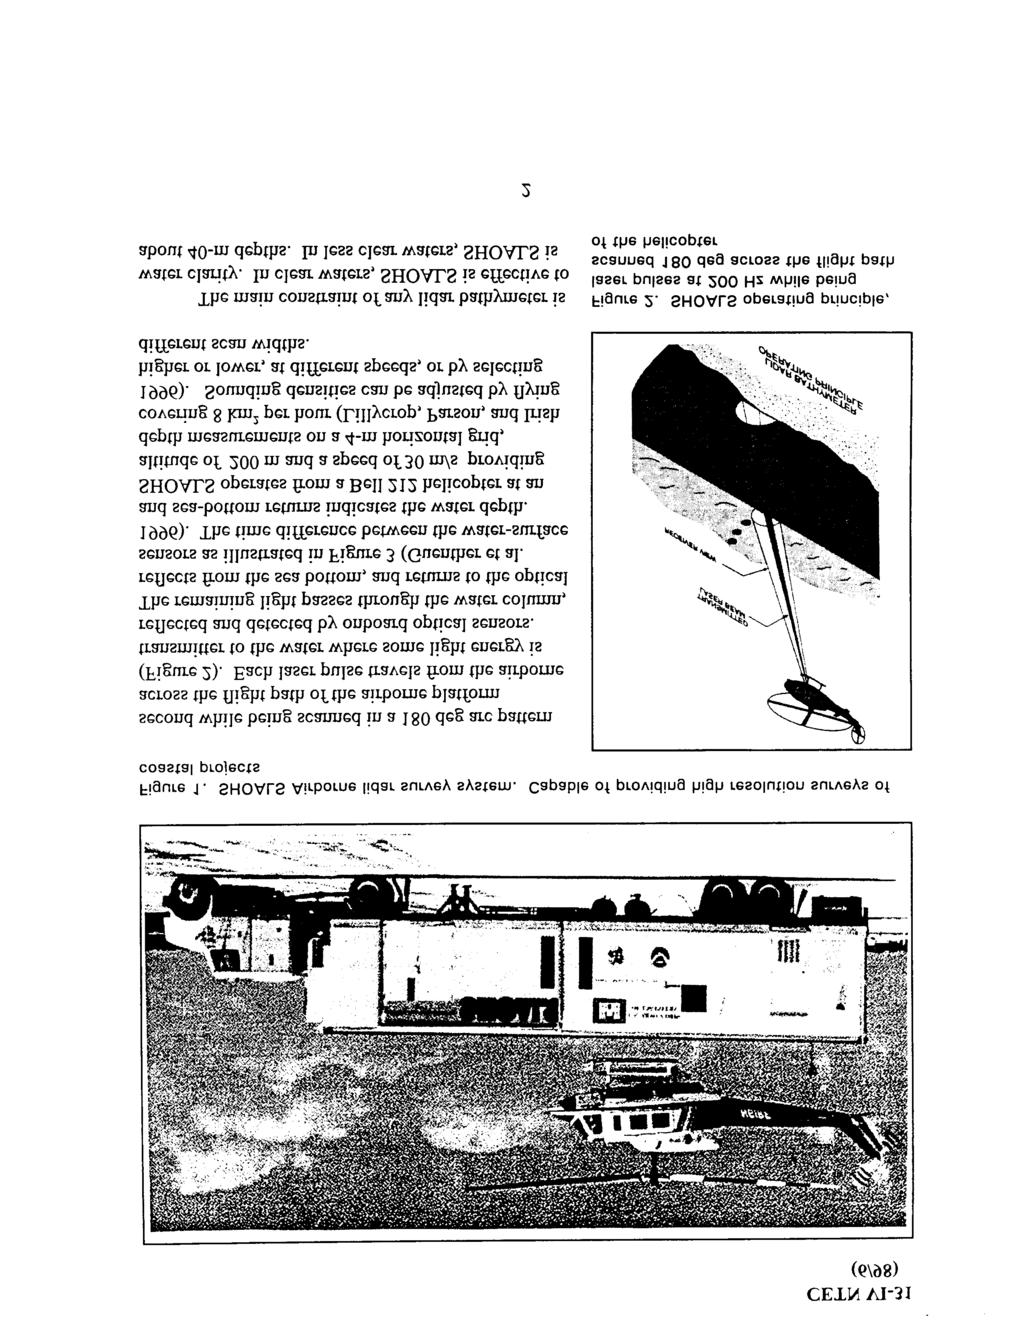 Figure 1. SHOALS Airborne lidar survey system.